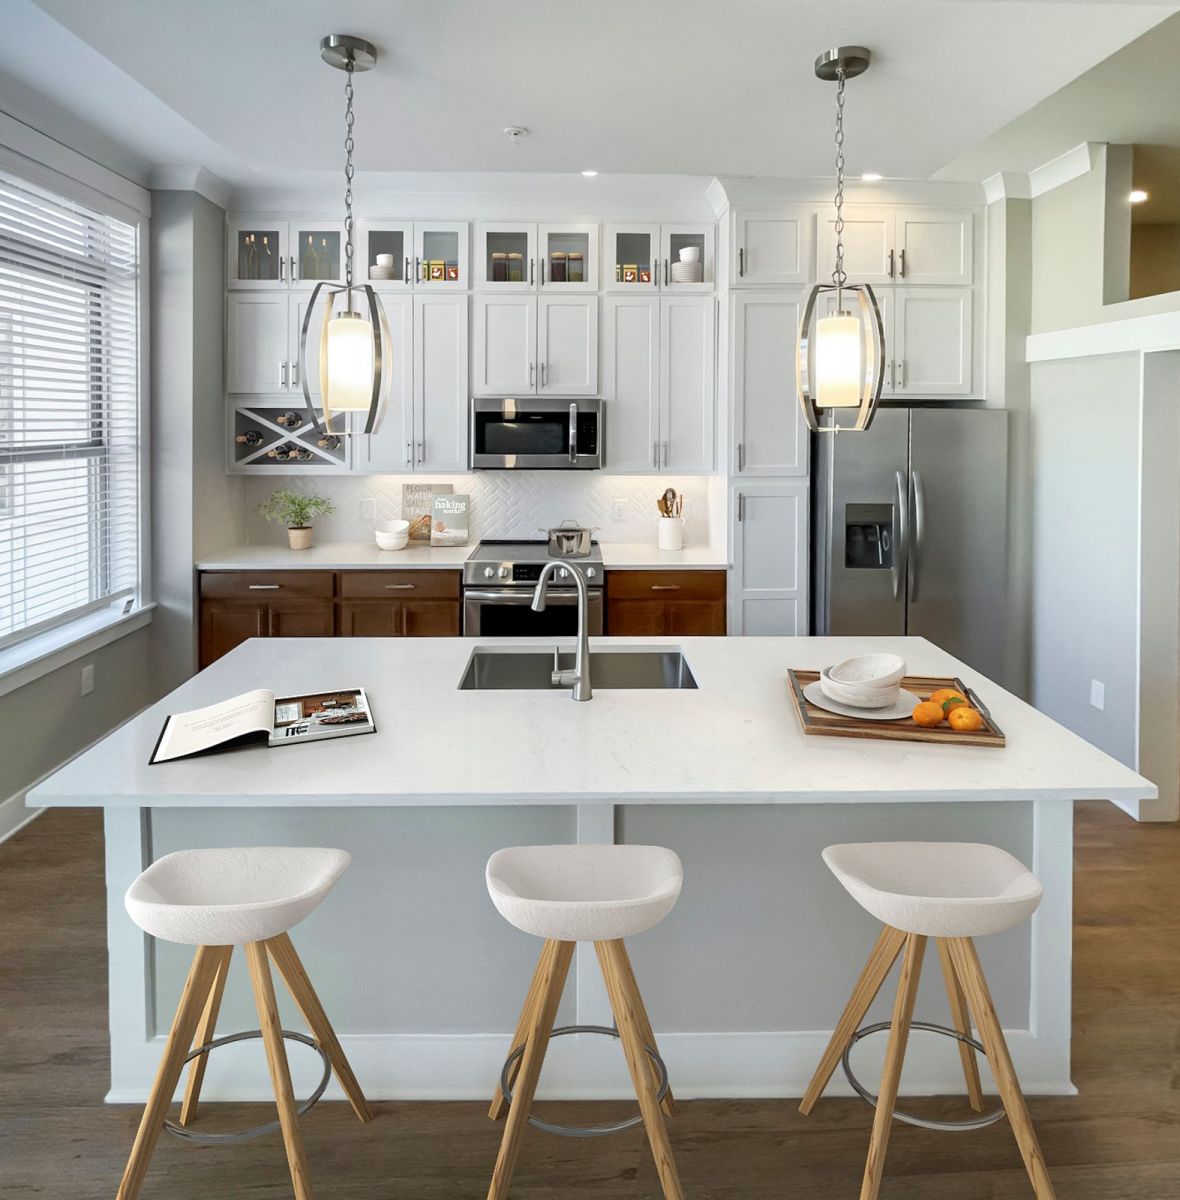 Luxury apartment interior showing kitchen island, luxury vinyl plank flooring, and stainless steel appliances